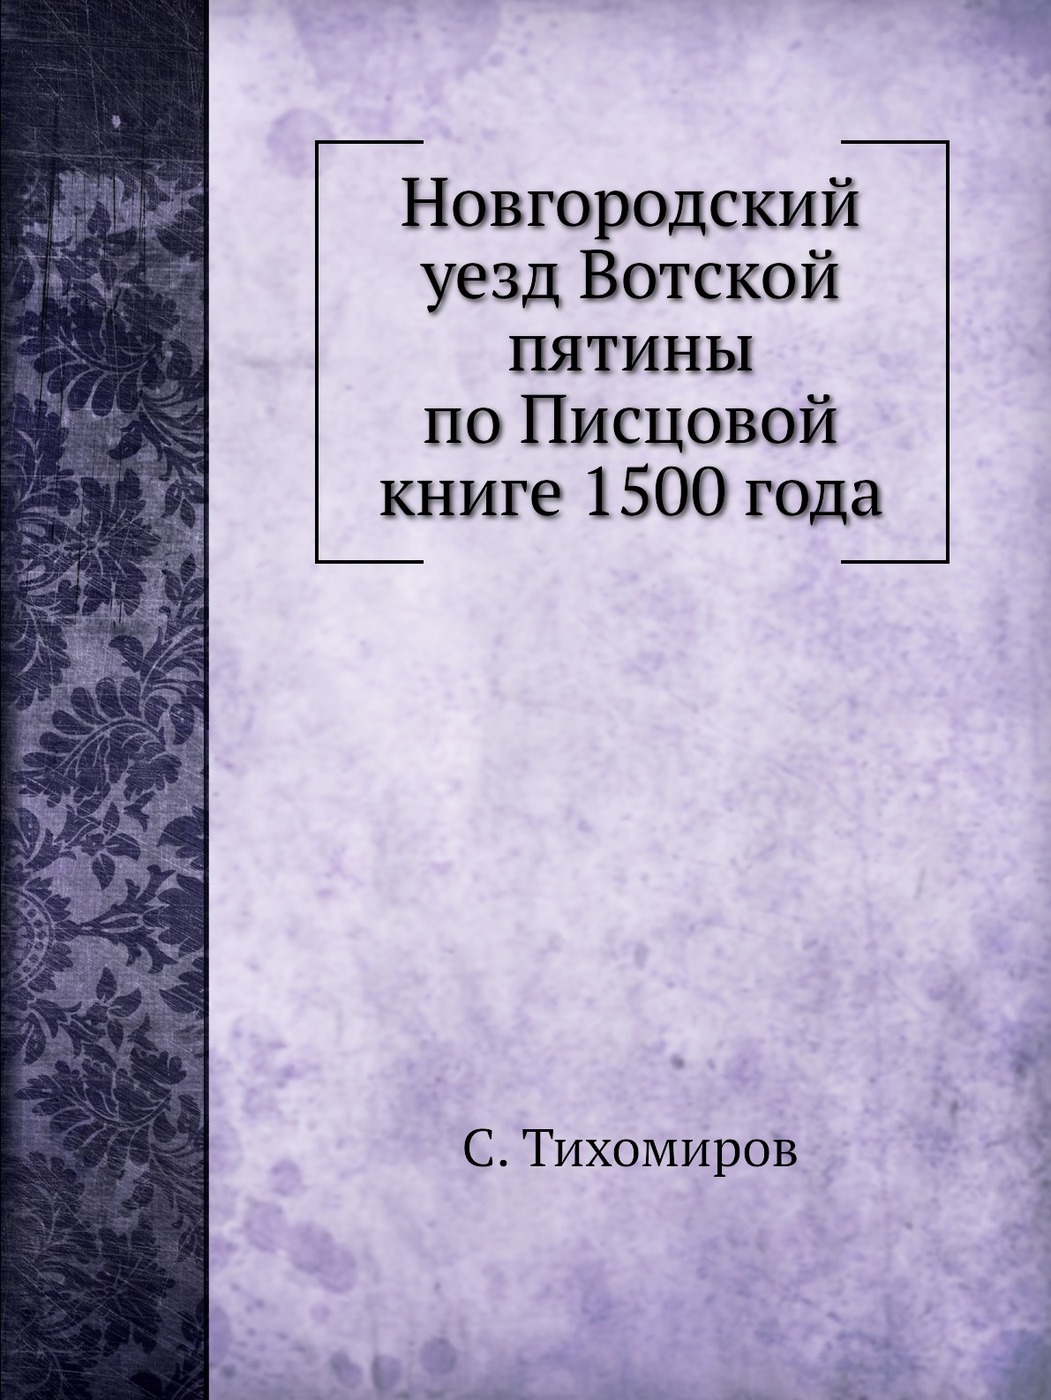 Книга 1500 года